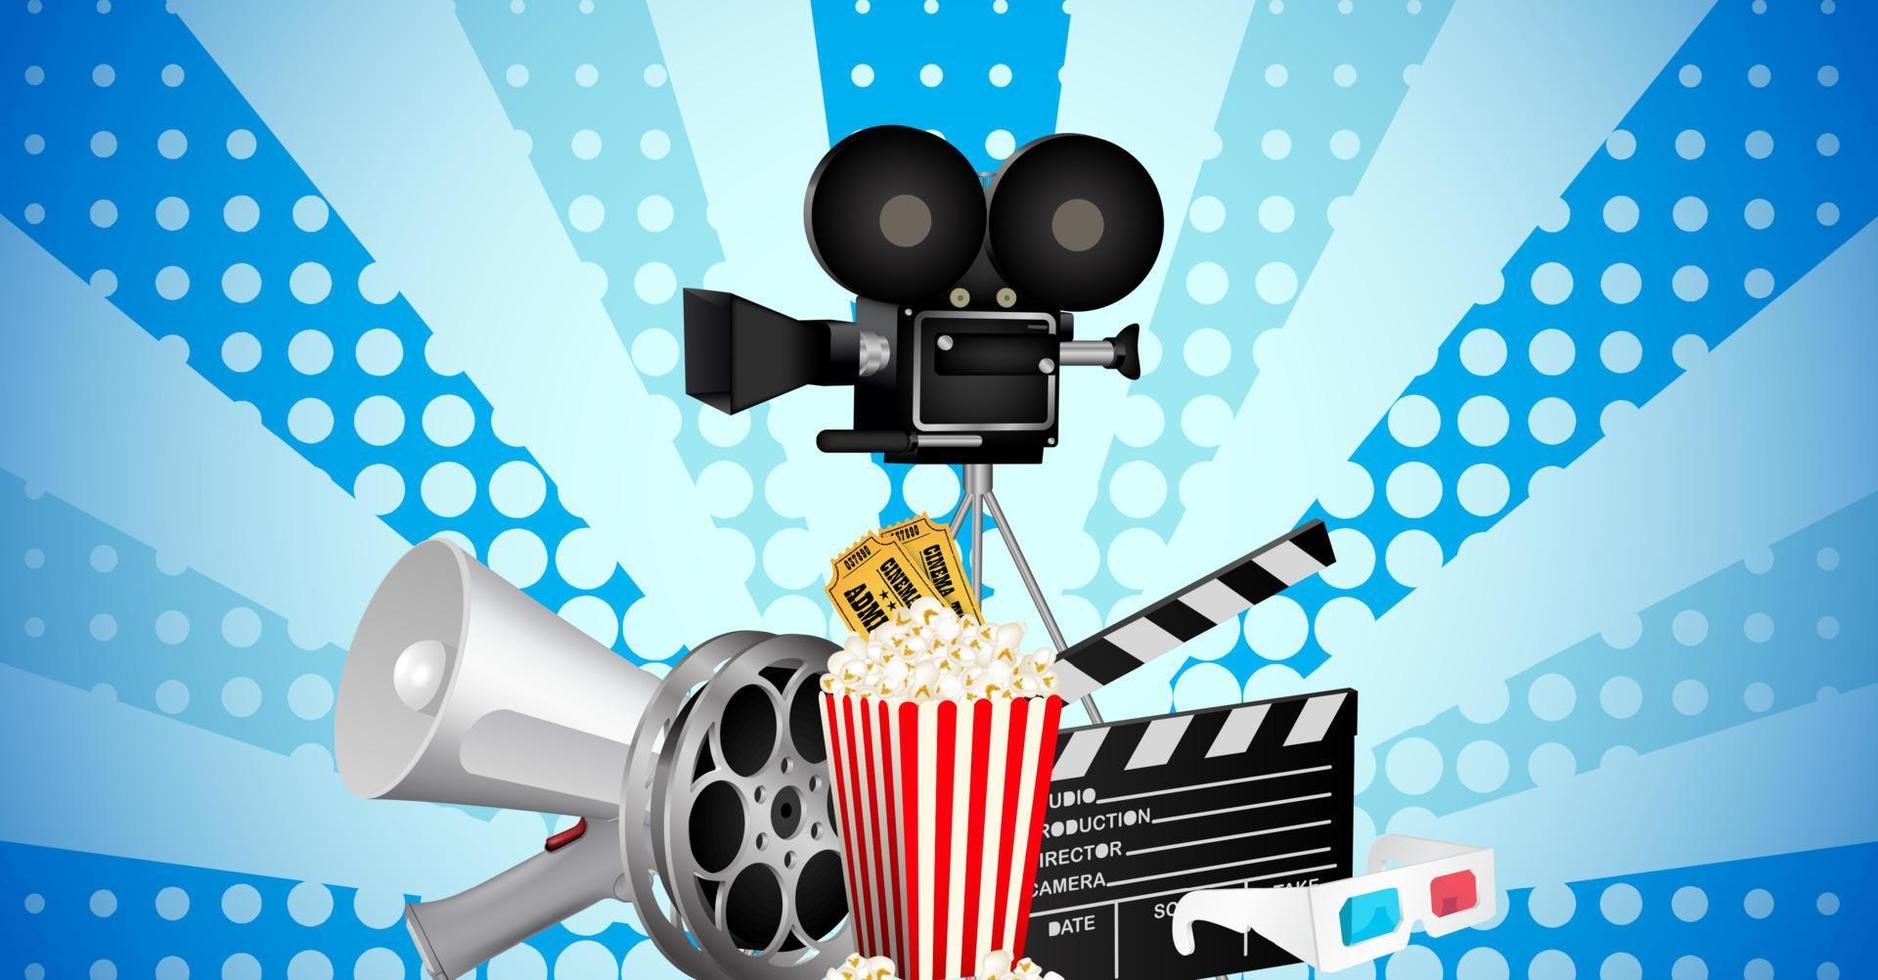 cinematograph in cinema films and popcorn vector